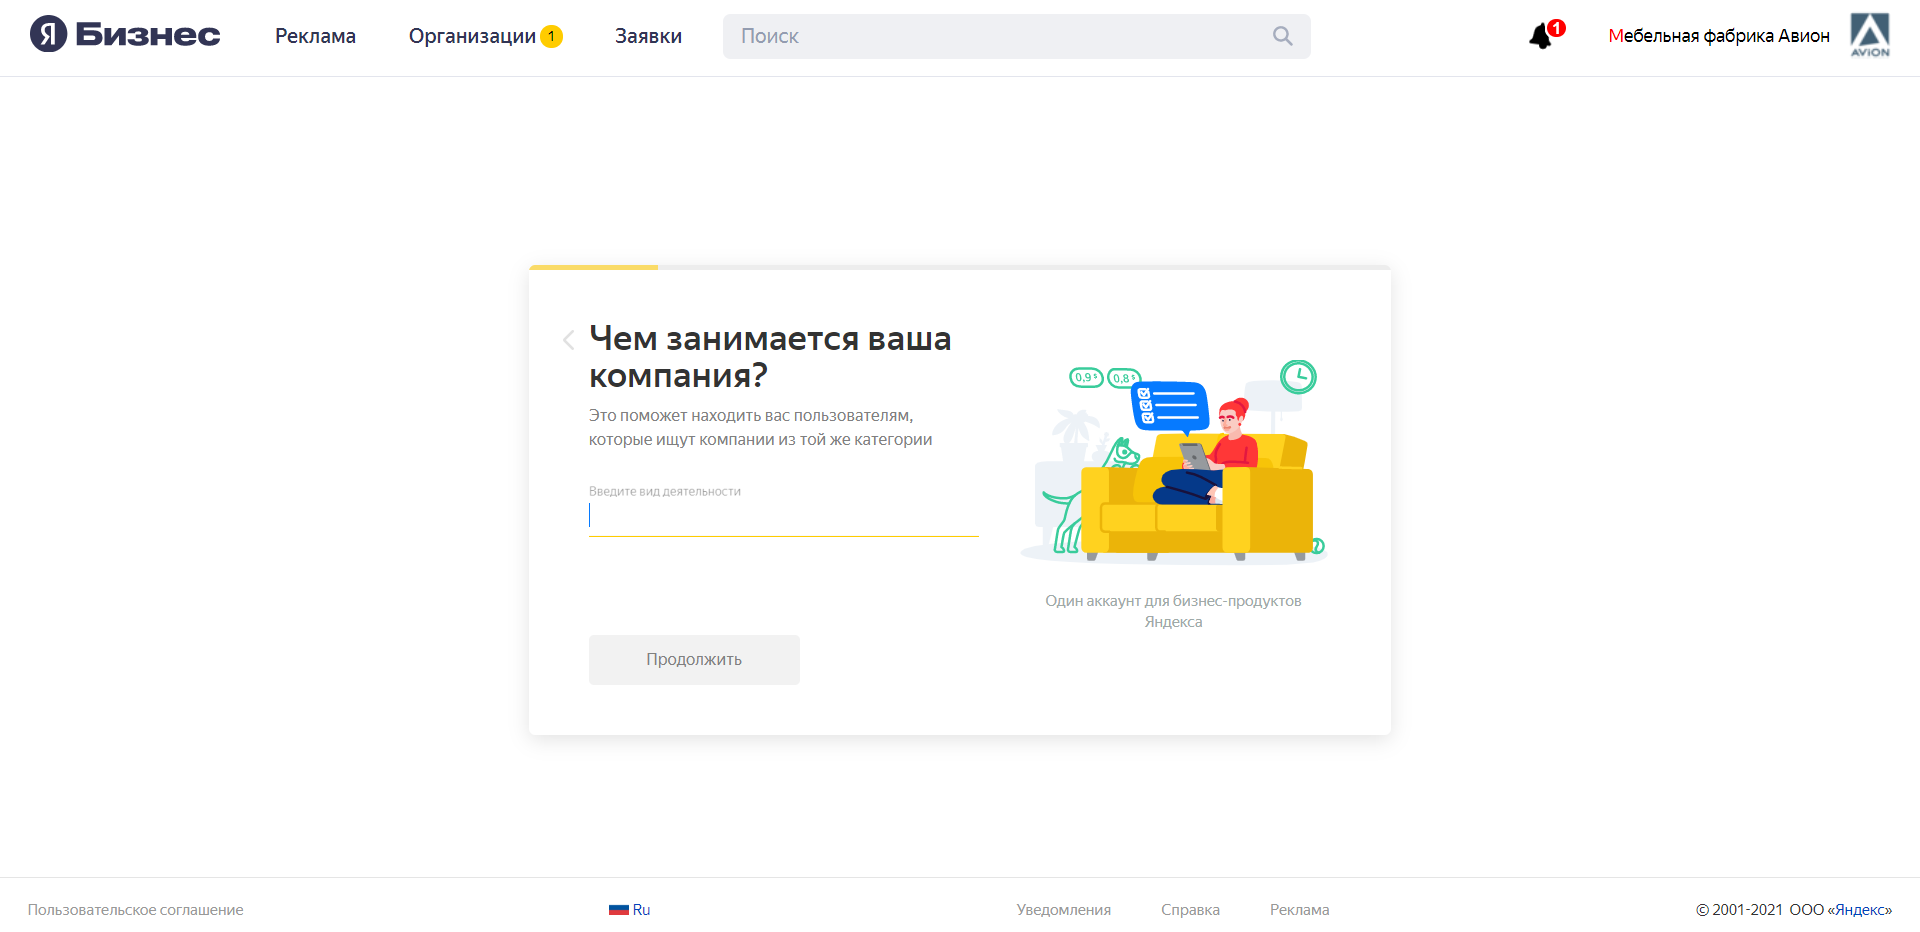 Следующий вопрос в анкете «Яндекс.Бизнес»